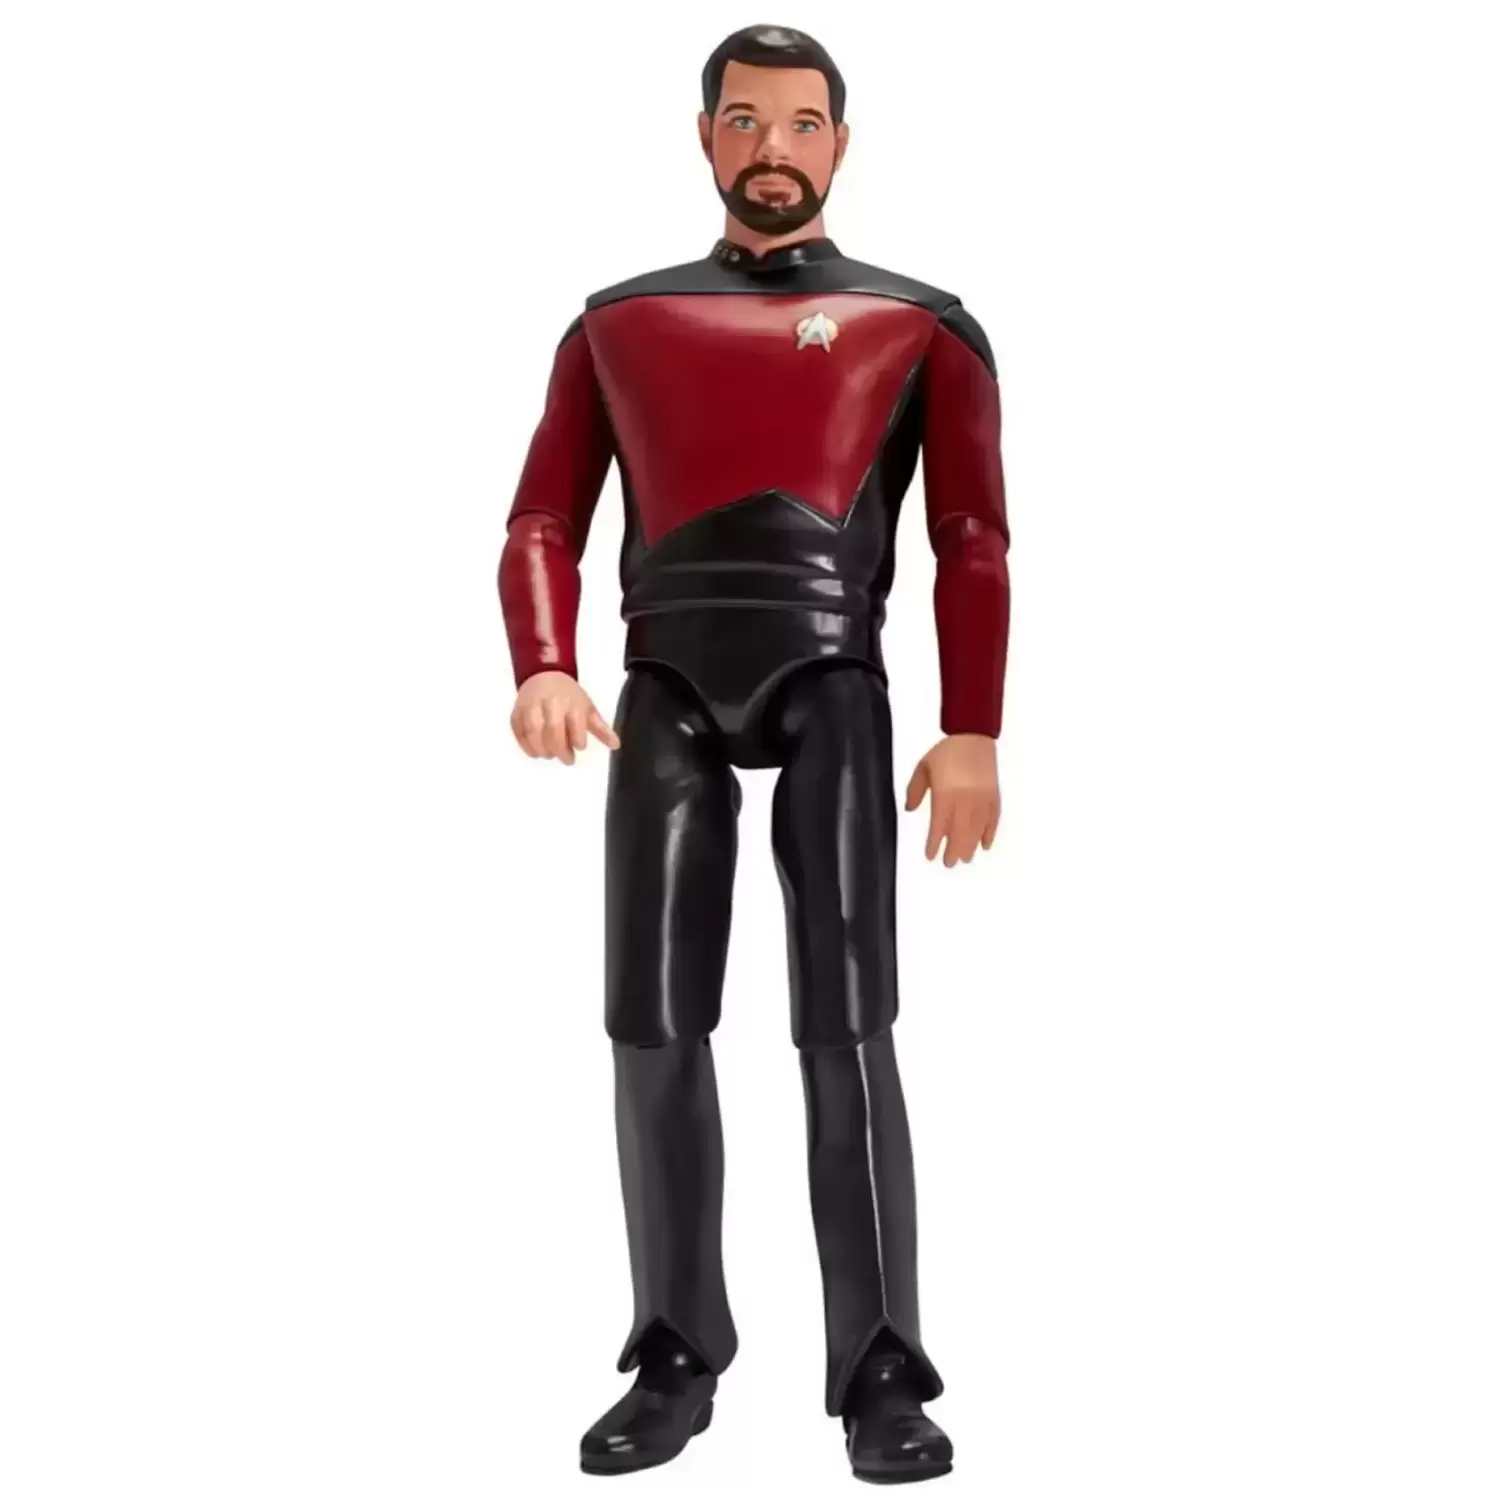 Star Trek The Next Generation - Commander William Riker